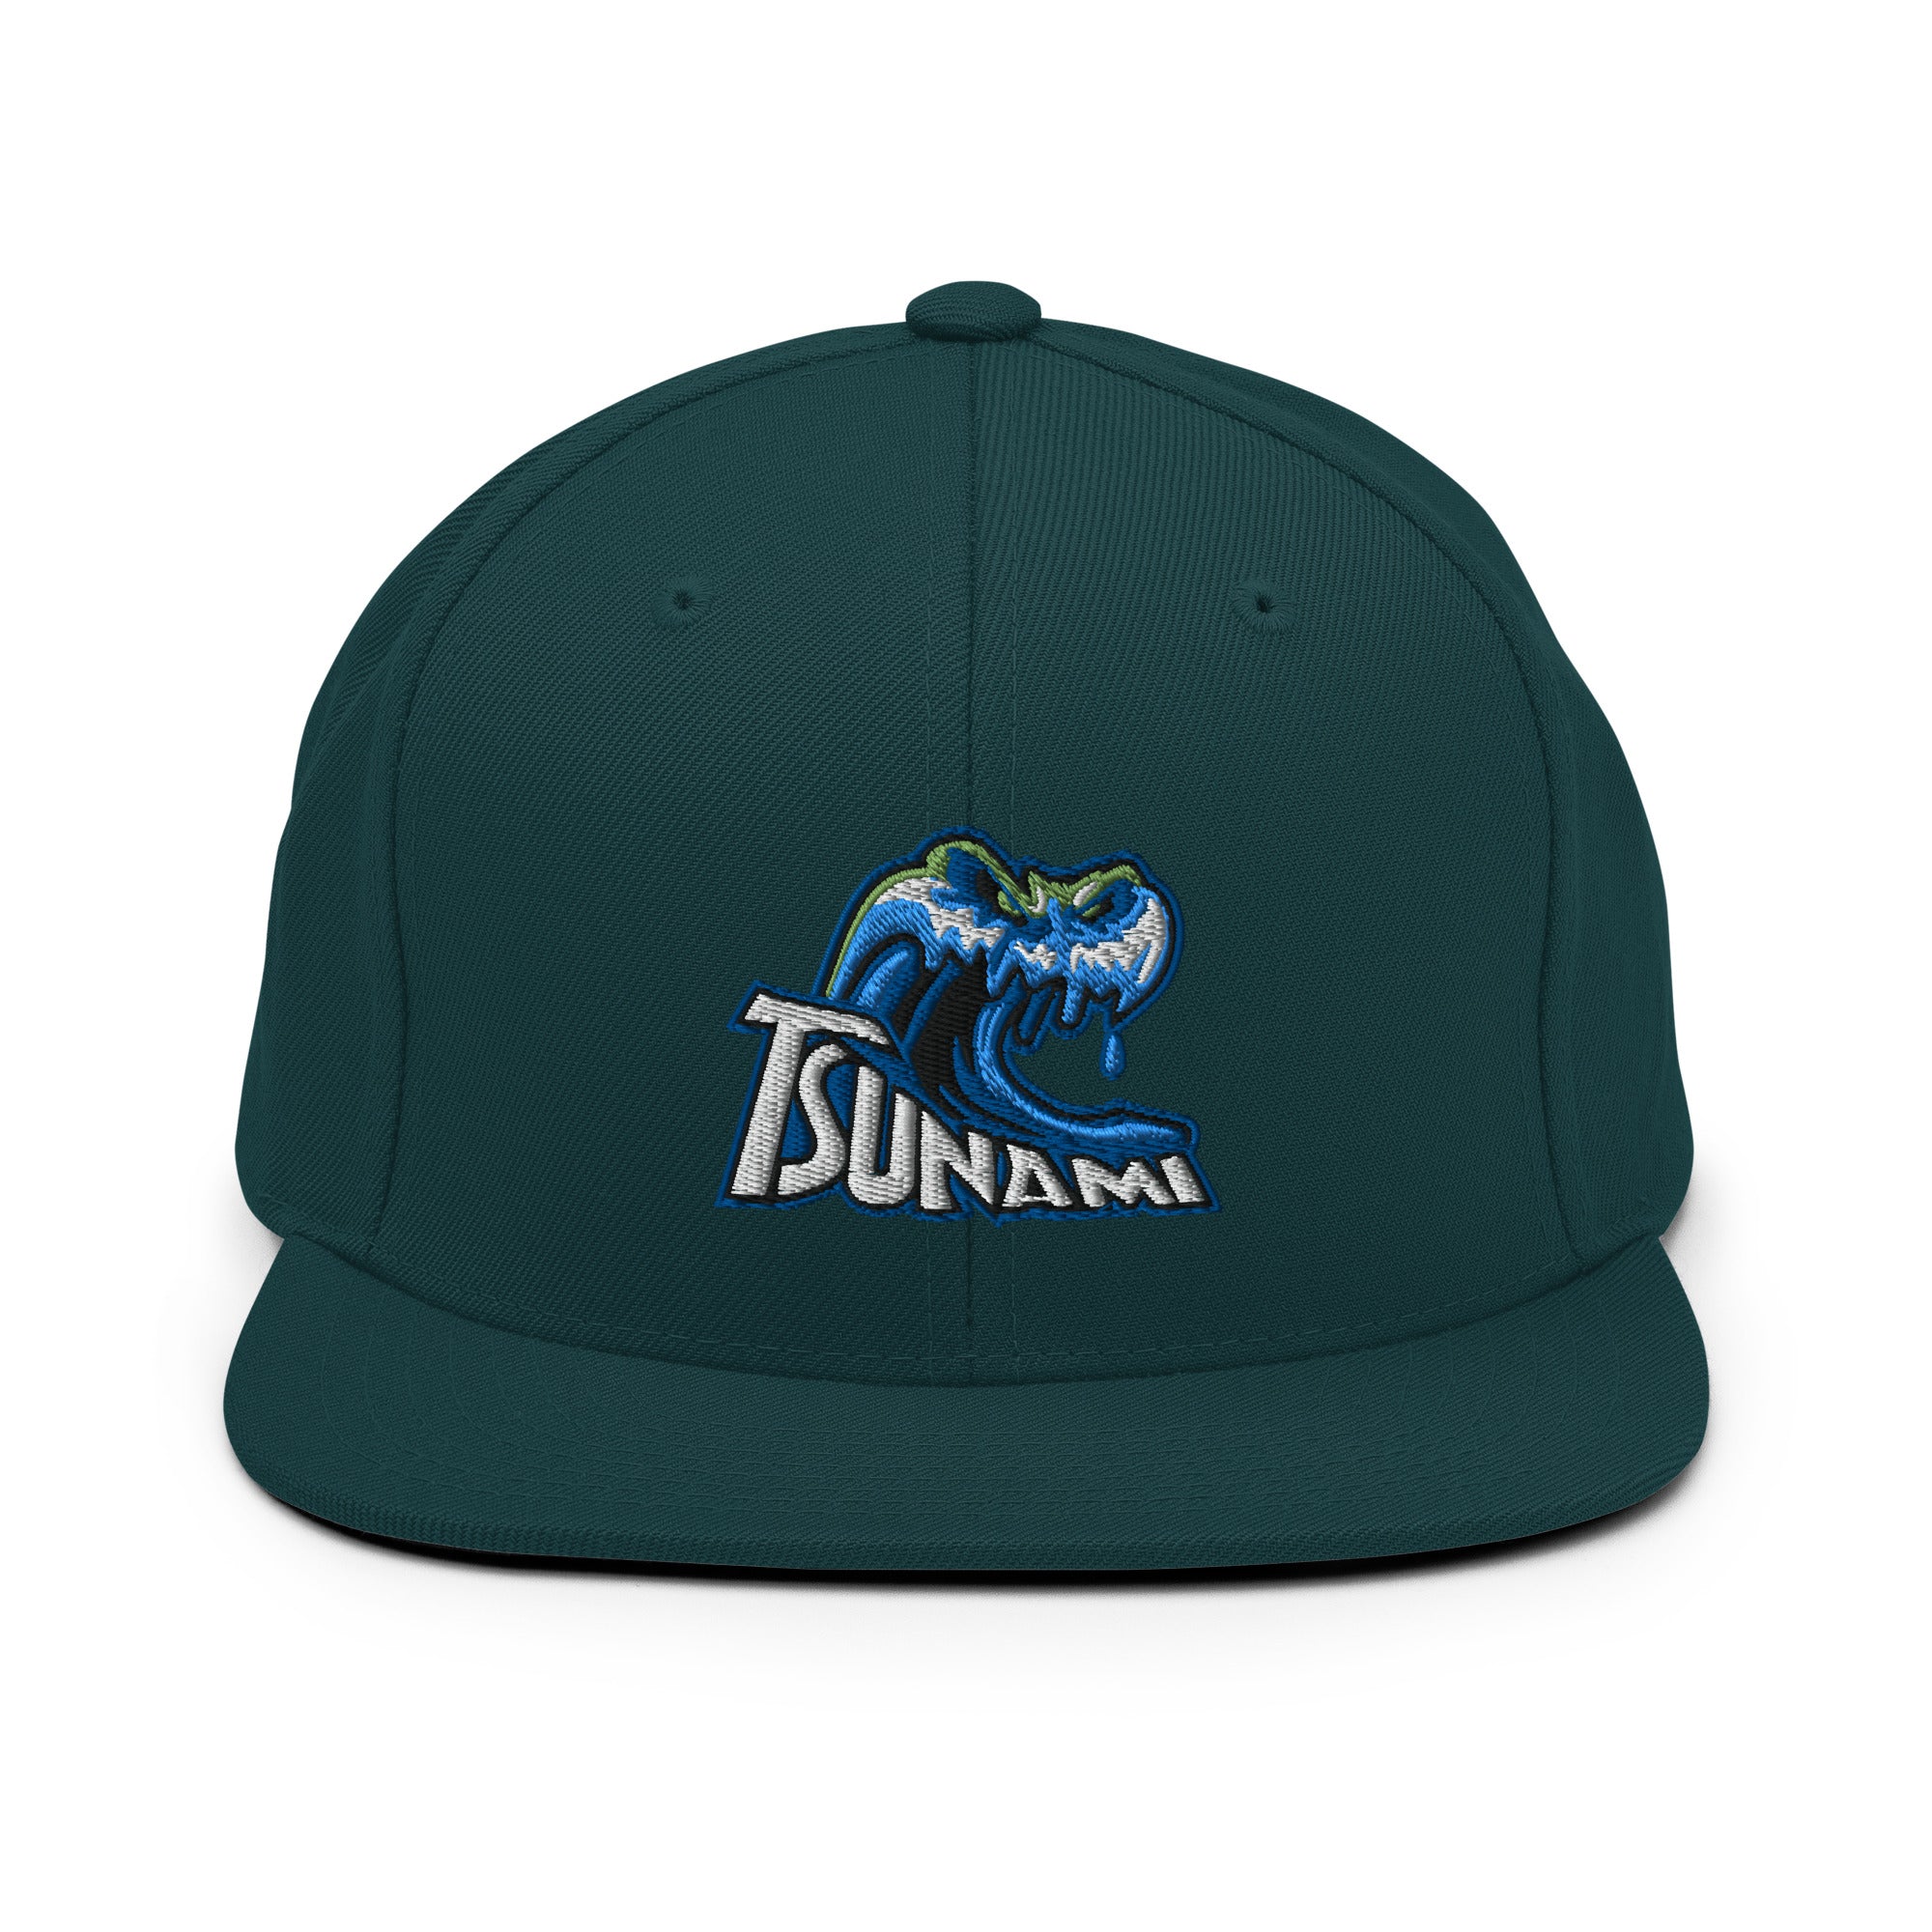 Tsunami Snapback Hat